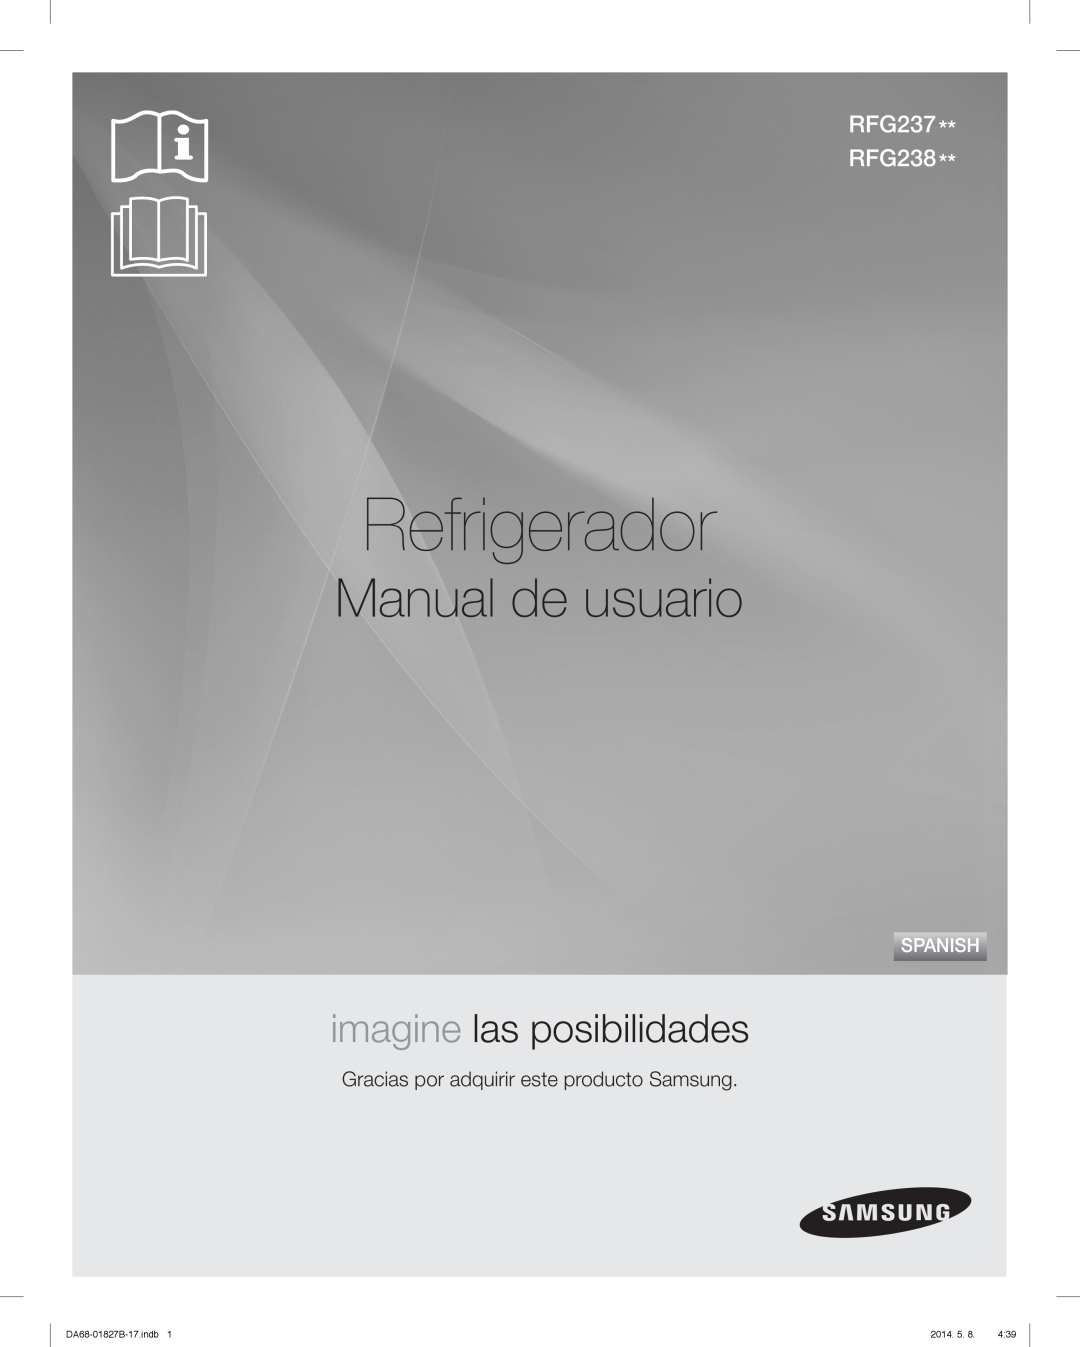 Samsung RFG237AARS Refrigerador, Manual de usuario, imagine las posibilidades, RFG237 RFG238, Spanish, DA68-01827B-17.indb 